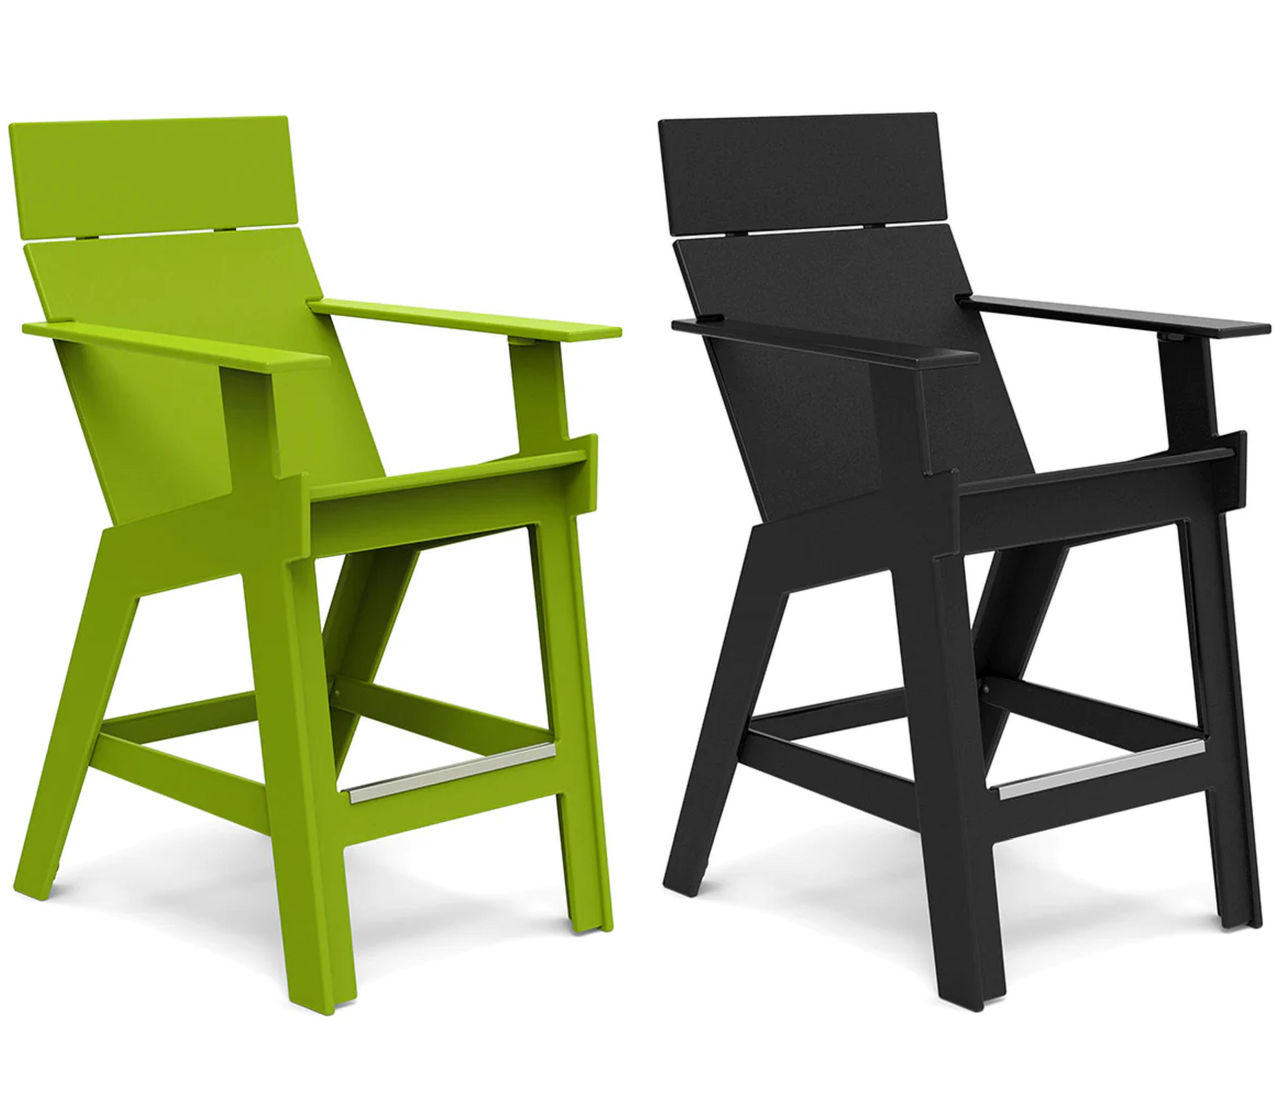 Lollygagger Hi-Rise Chair Modular Design-Color variant 2